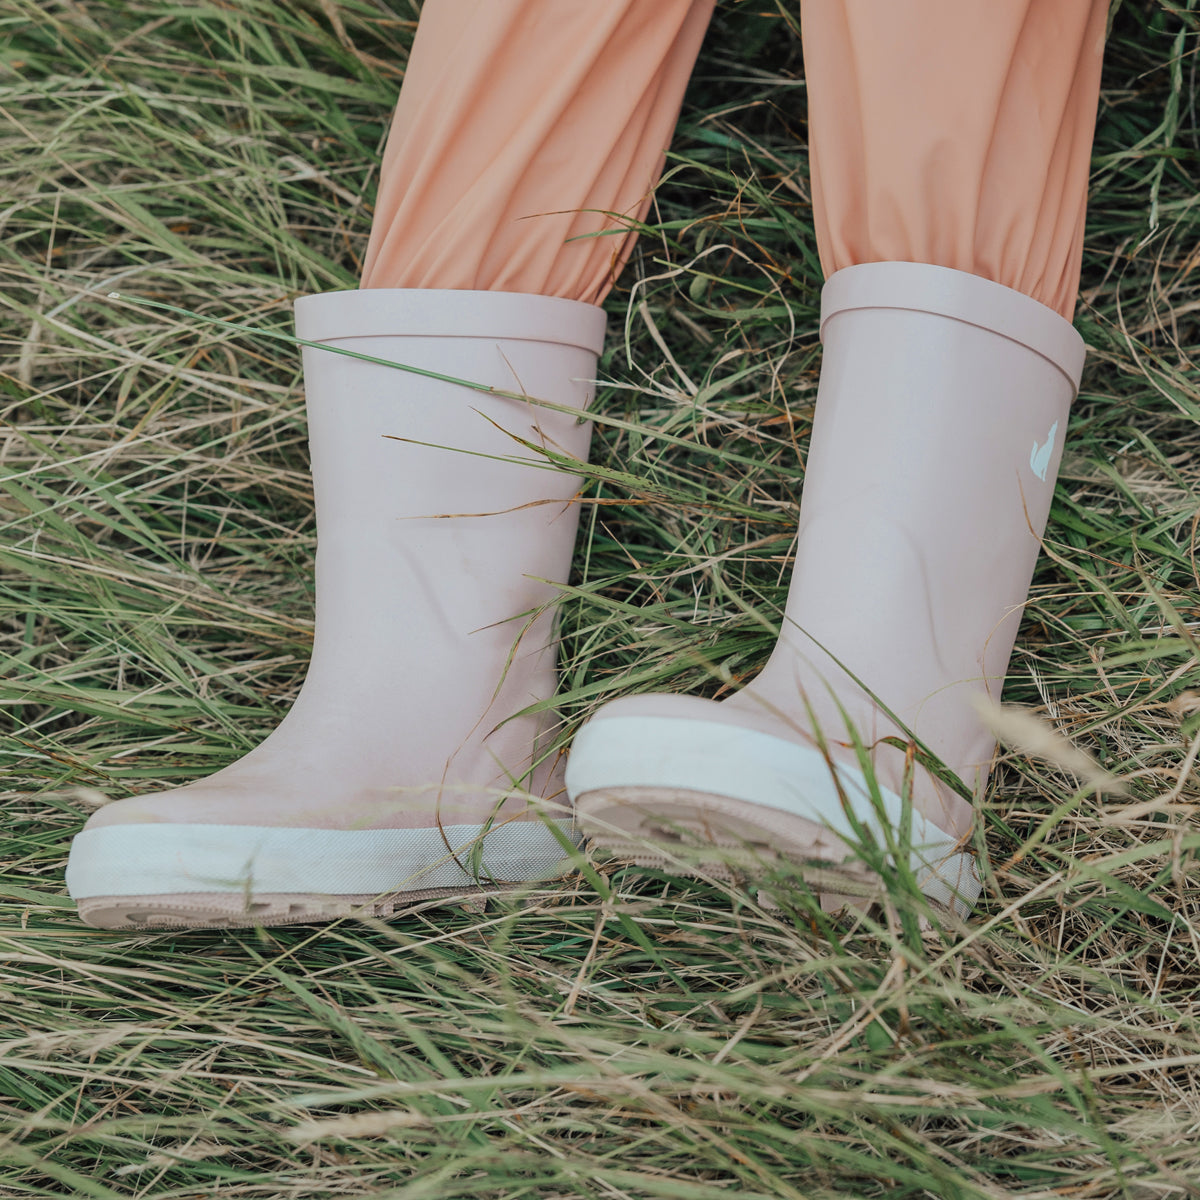 Rain Boots / Dusty Pink